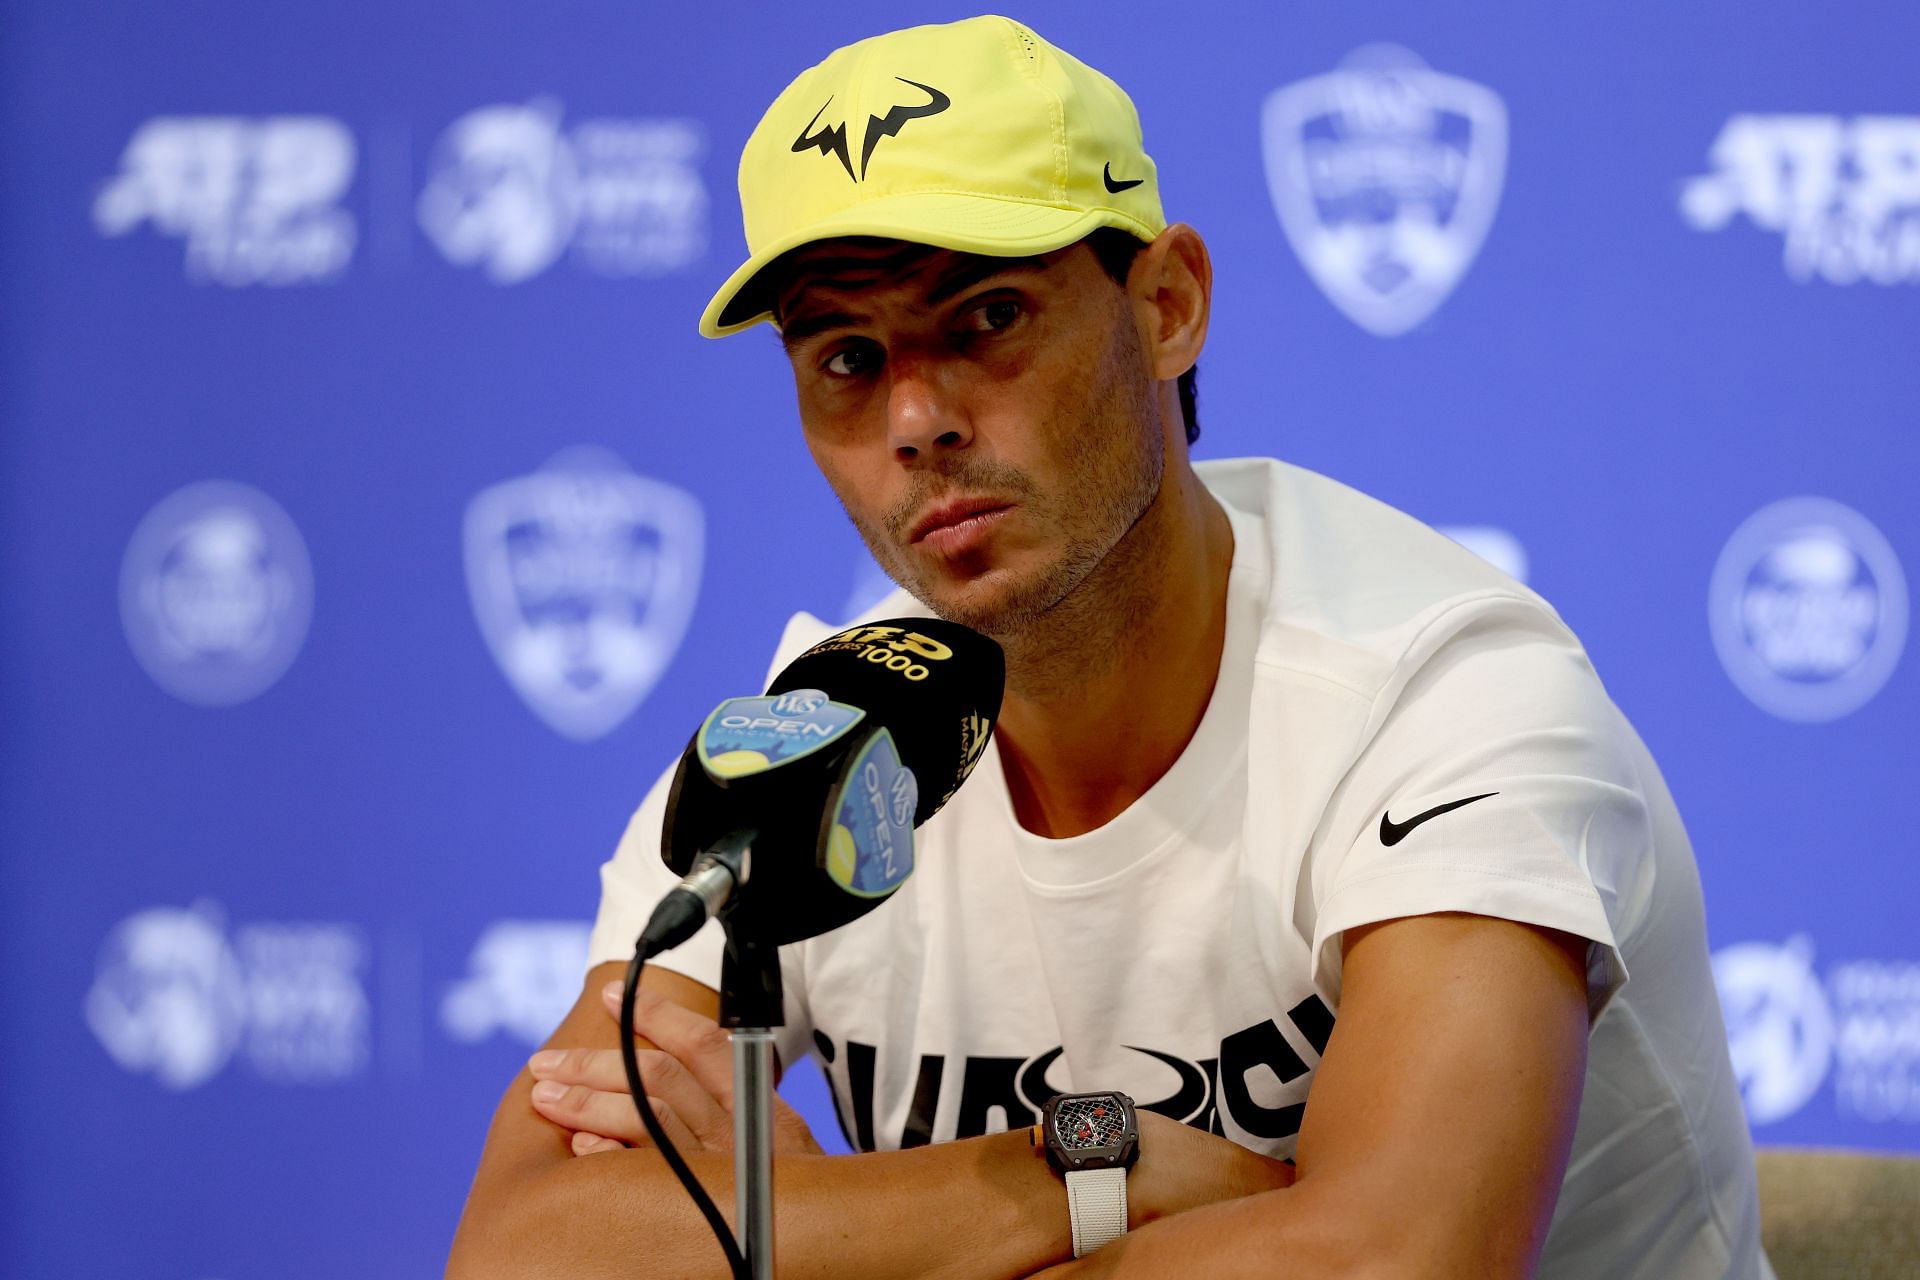 Rafael Nadal speaking at a press conference ahead of the 2022 Cincinnati Open